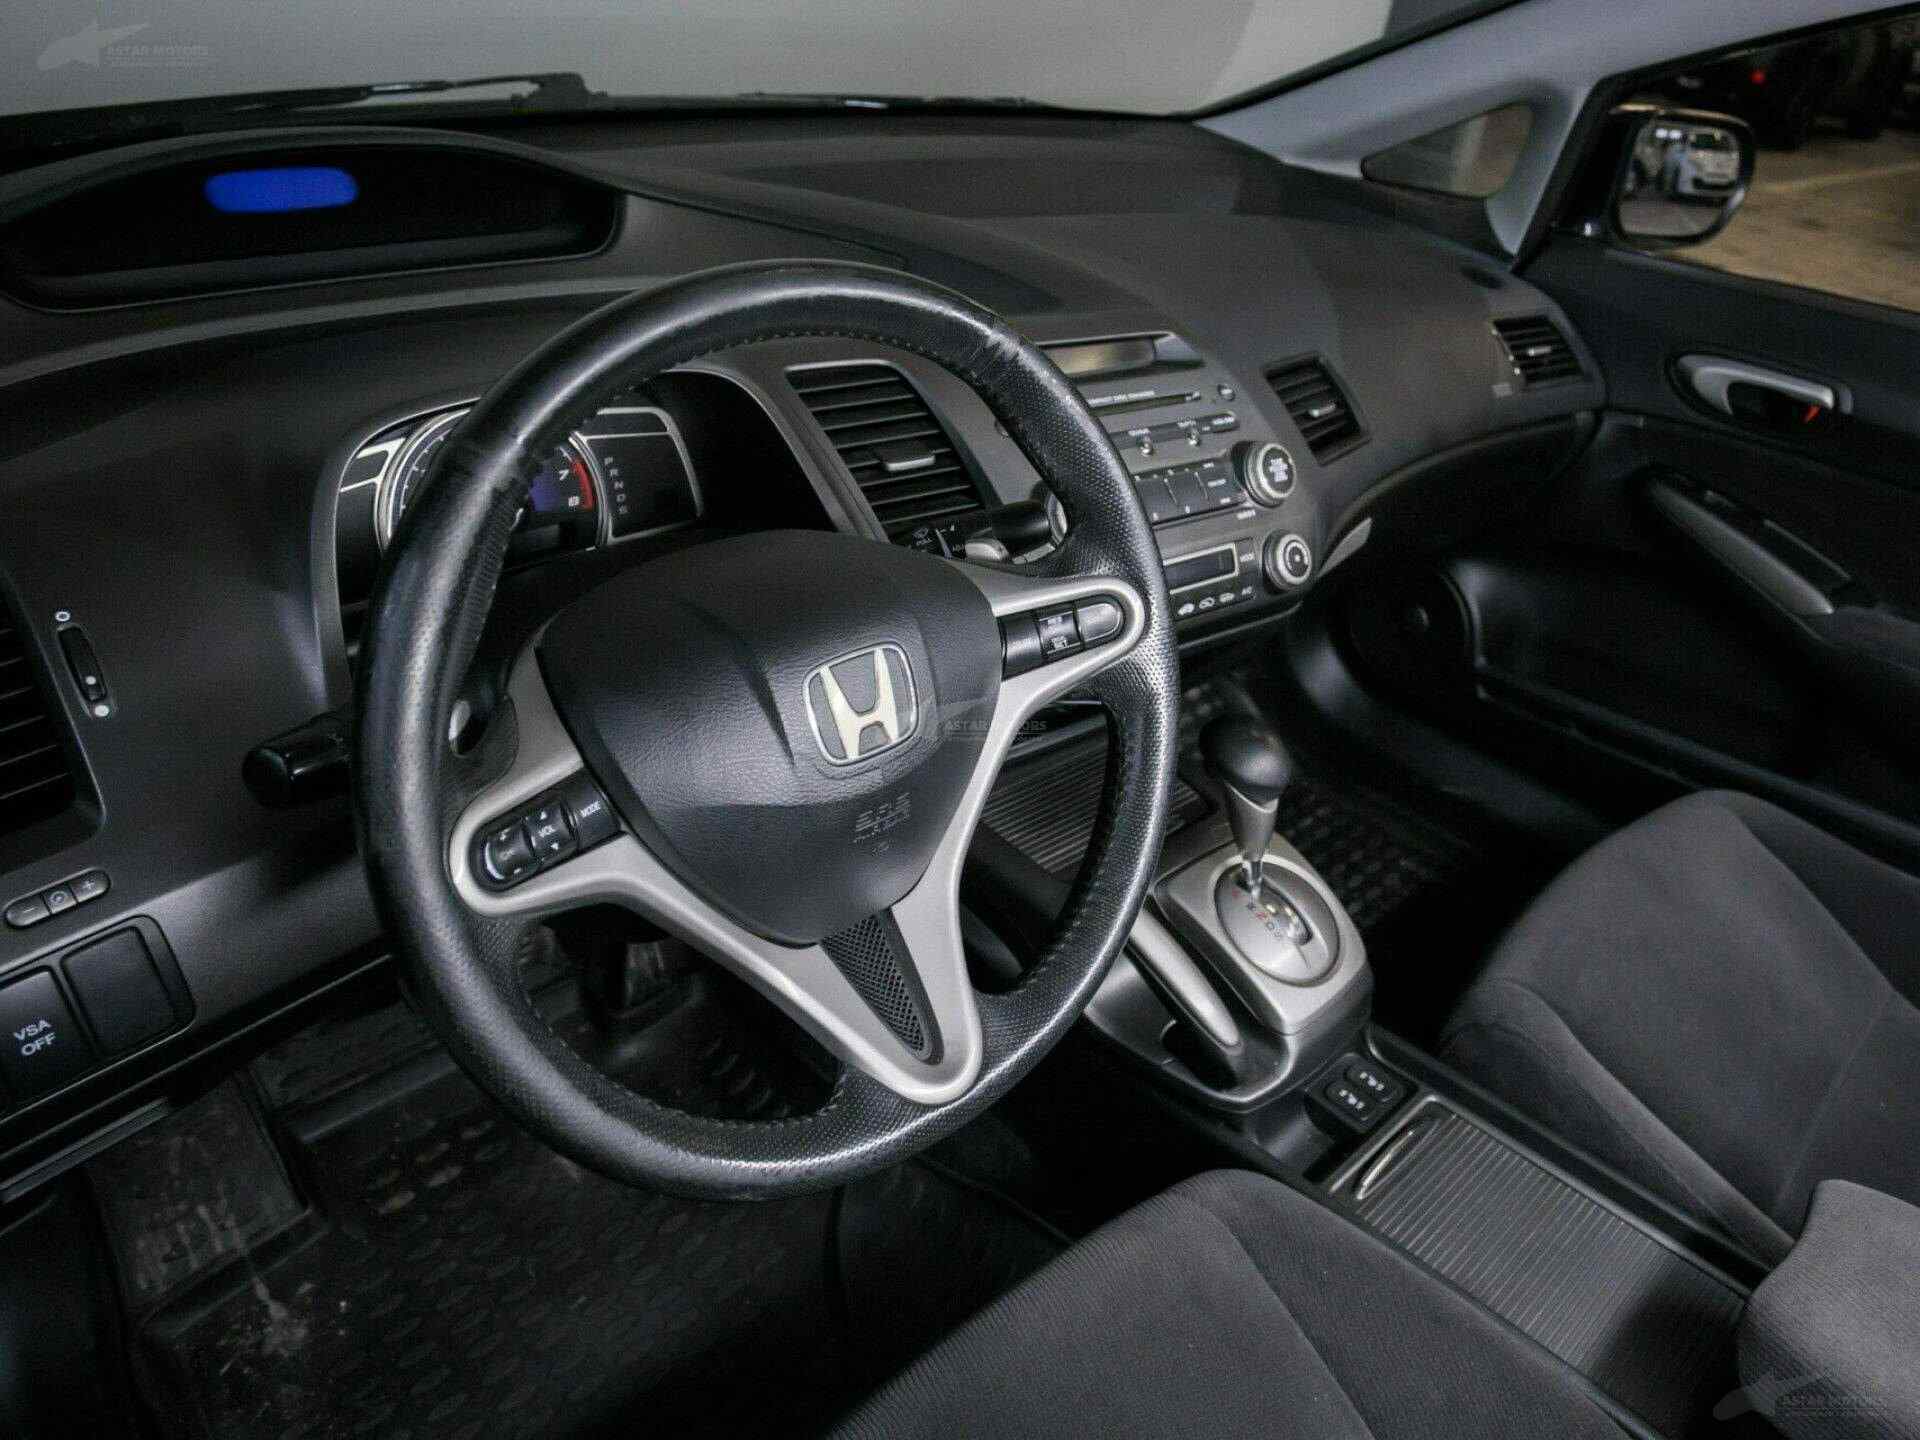 Honda civic автомат. Honda Civic VIII 2007. Honda Civic 2007 1.8 автомат. Honda Civic 2007 1.8. Хонда Цивик 2007 1.8 механика.